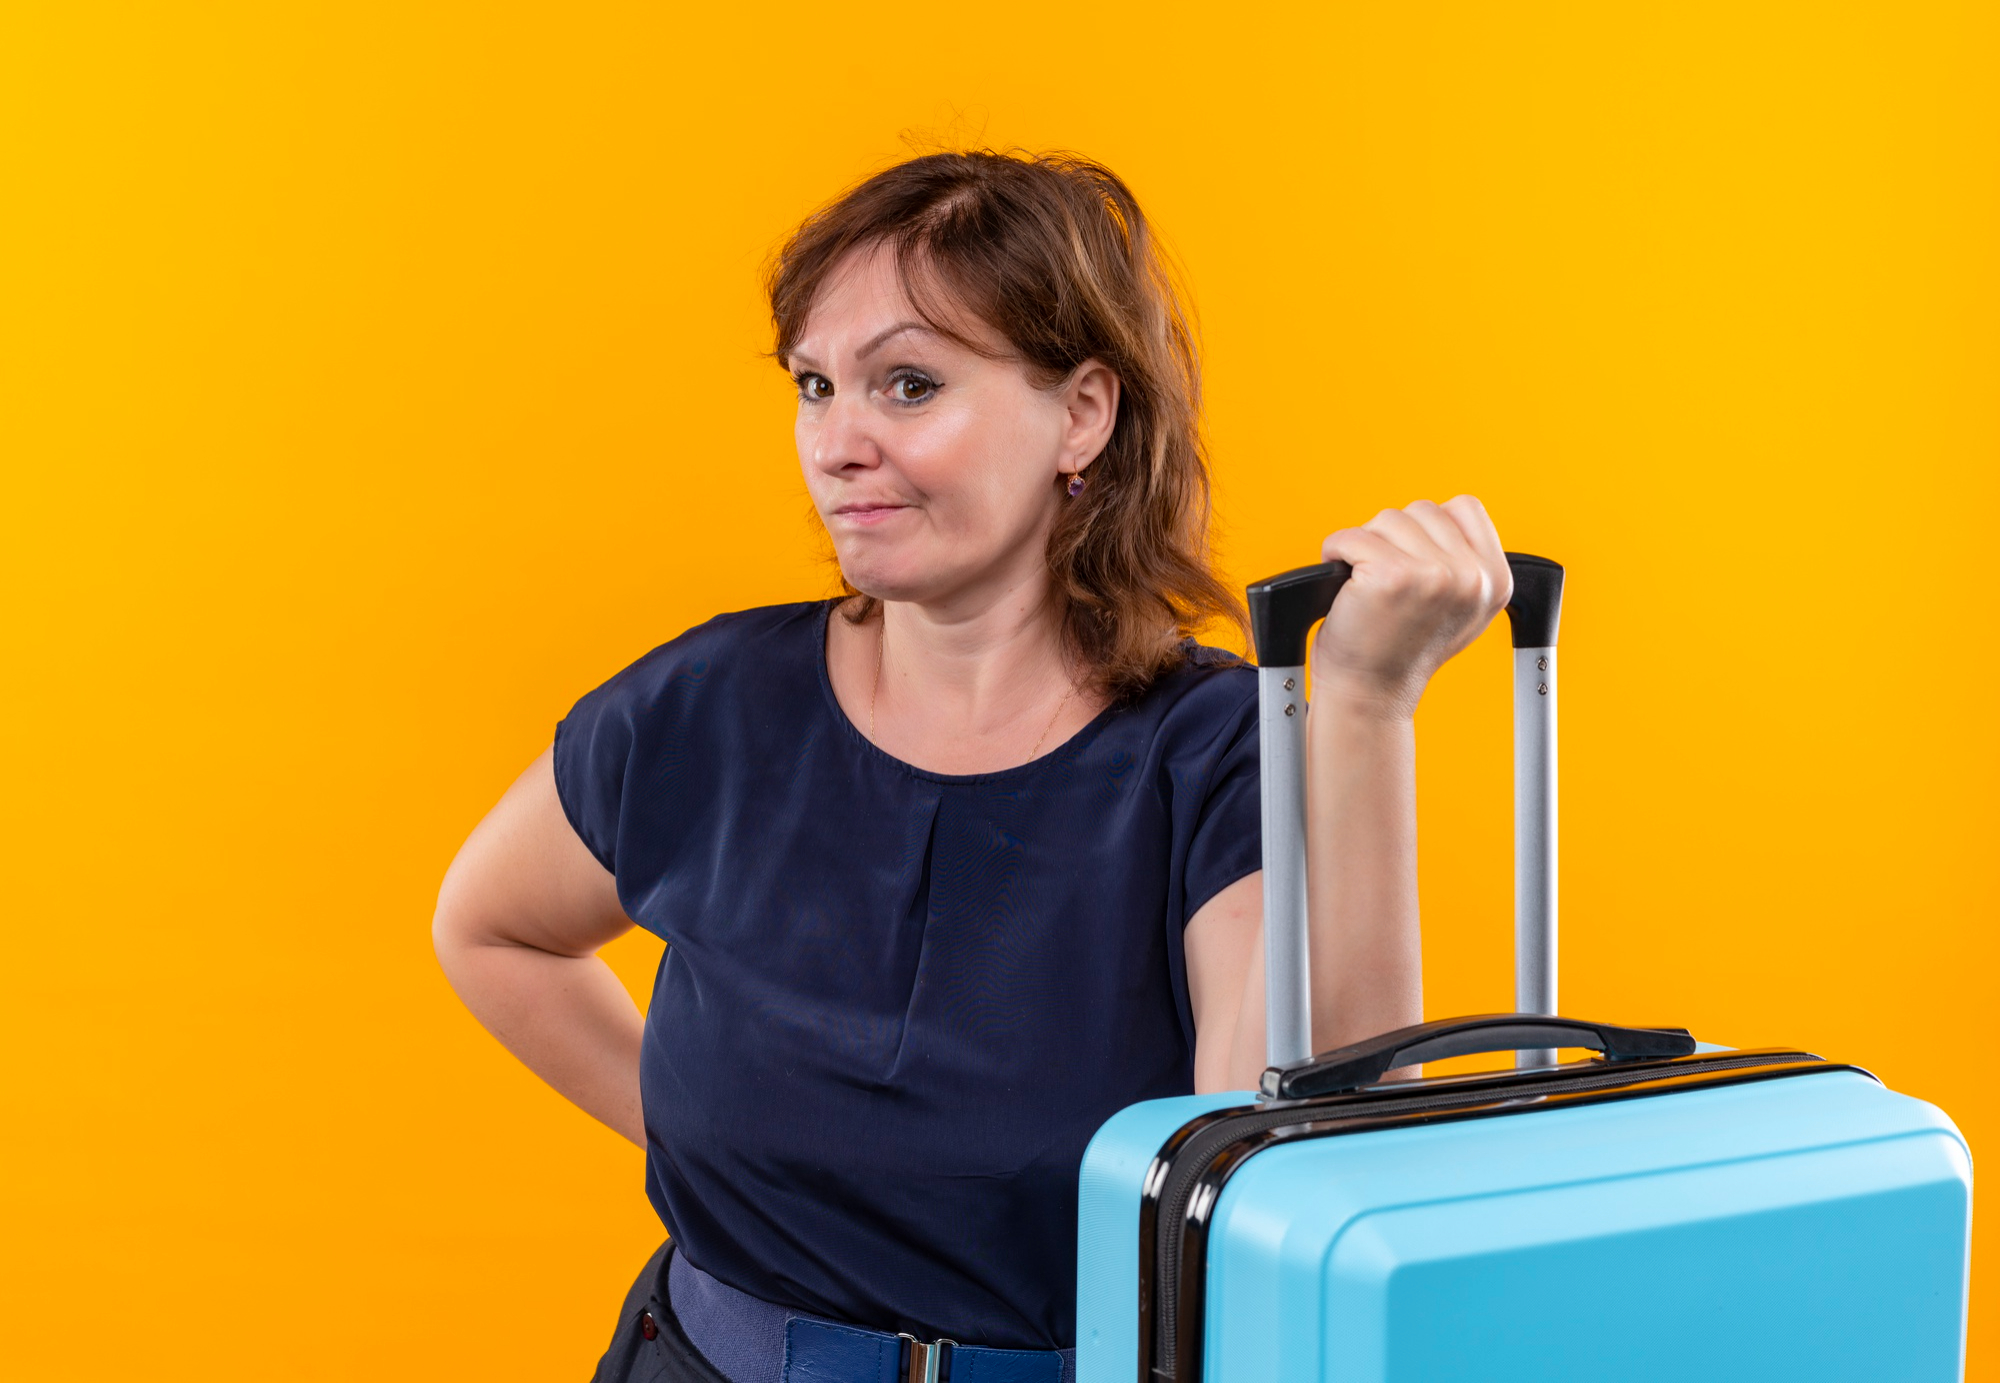 An upset looking woman holding luggage | Source: Freepik